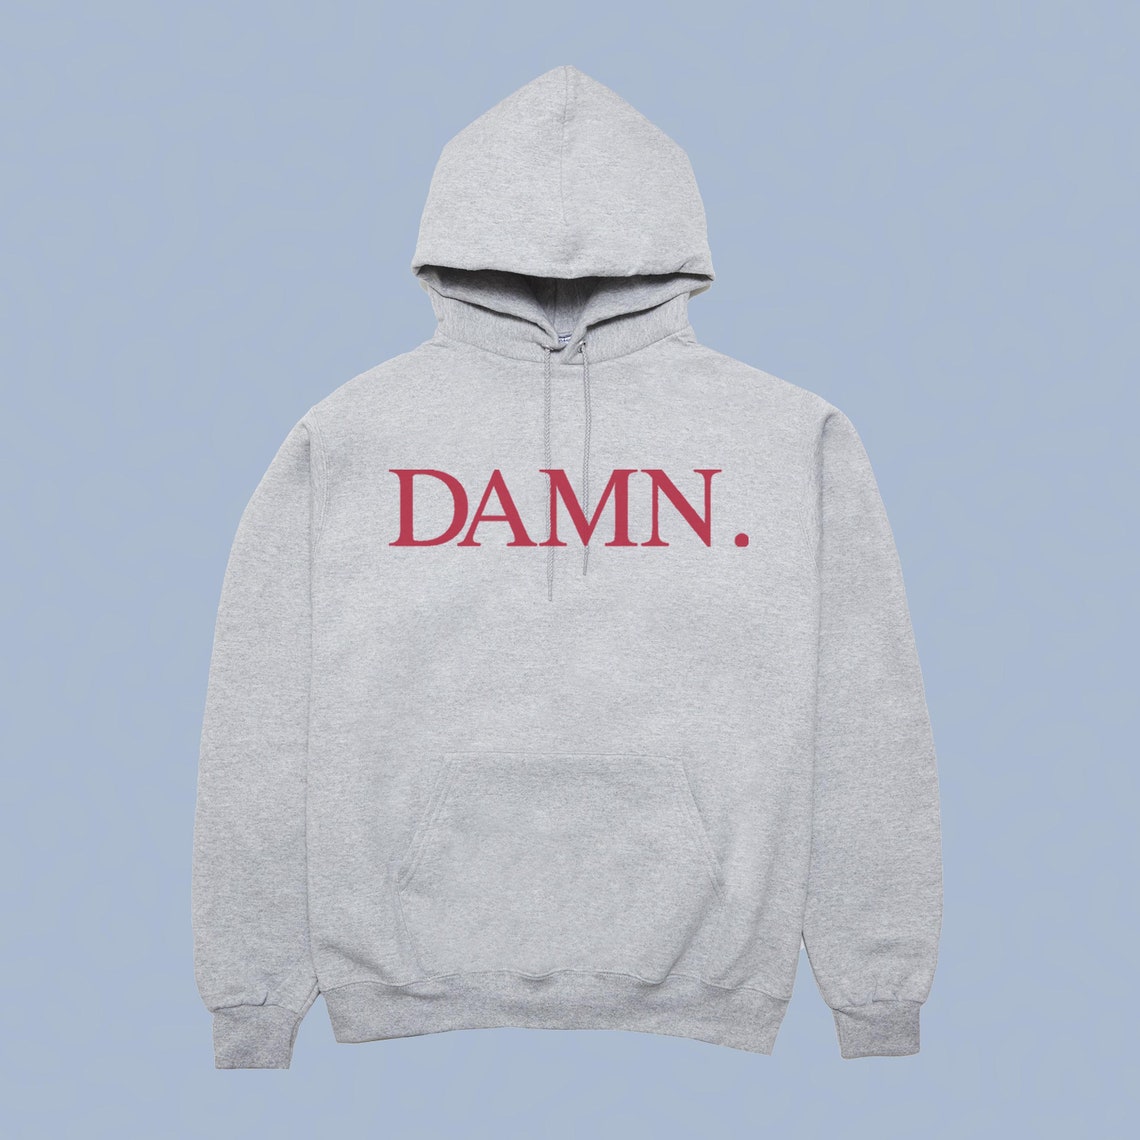 DAMN. Full Print Kendrick Lamar Inspired / Hoodie / 50 50 | Etsy